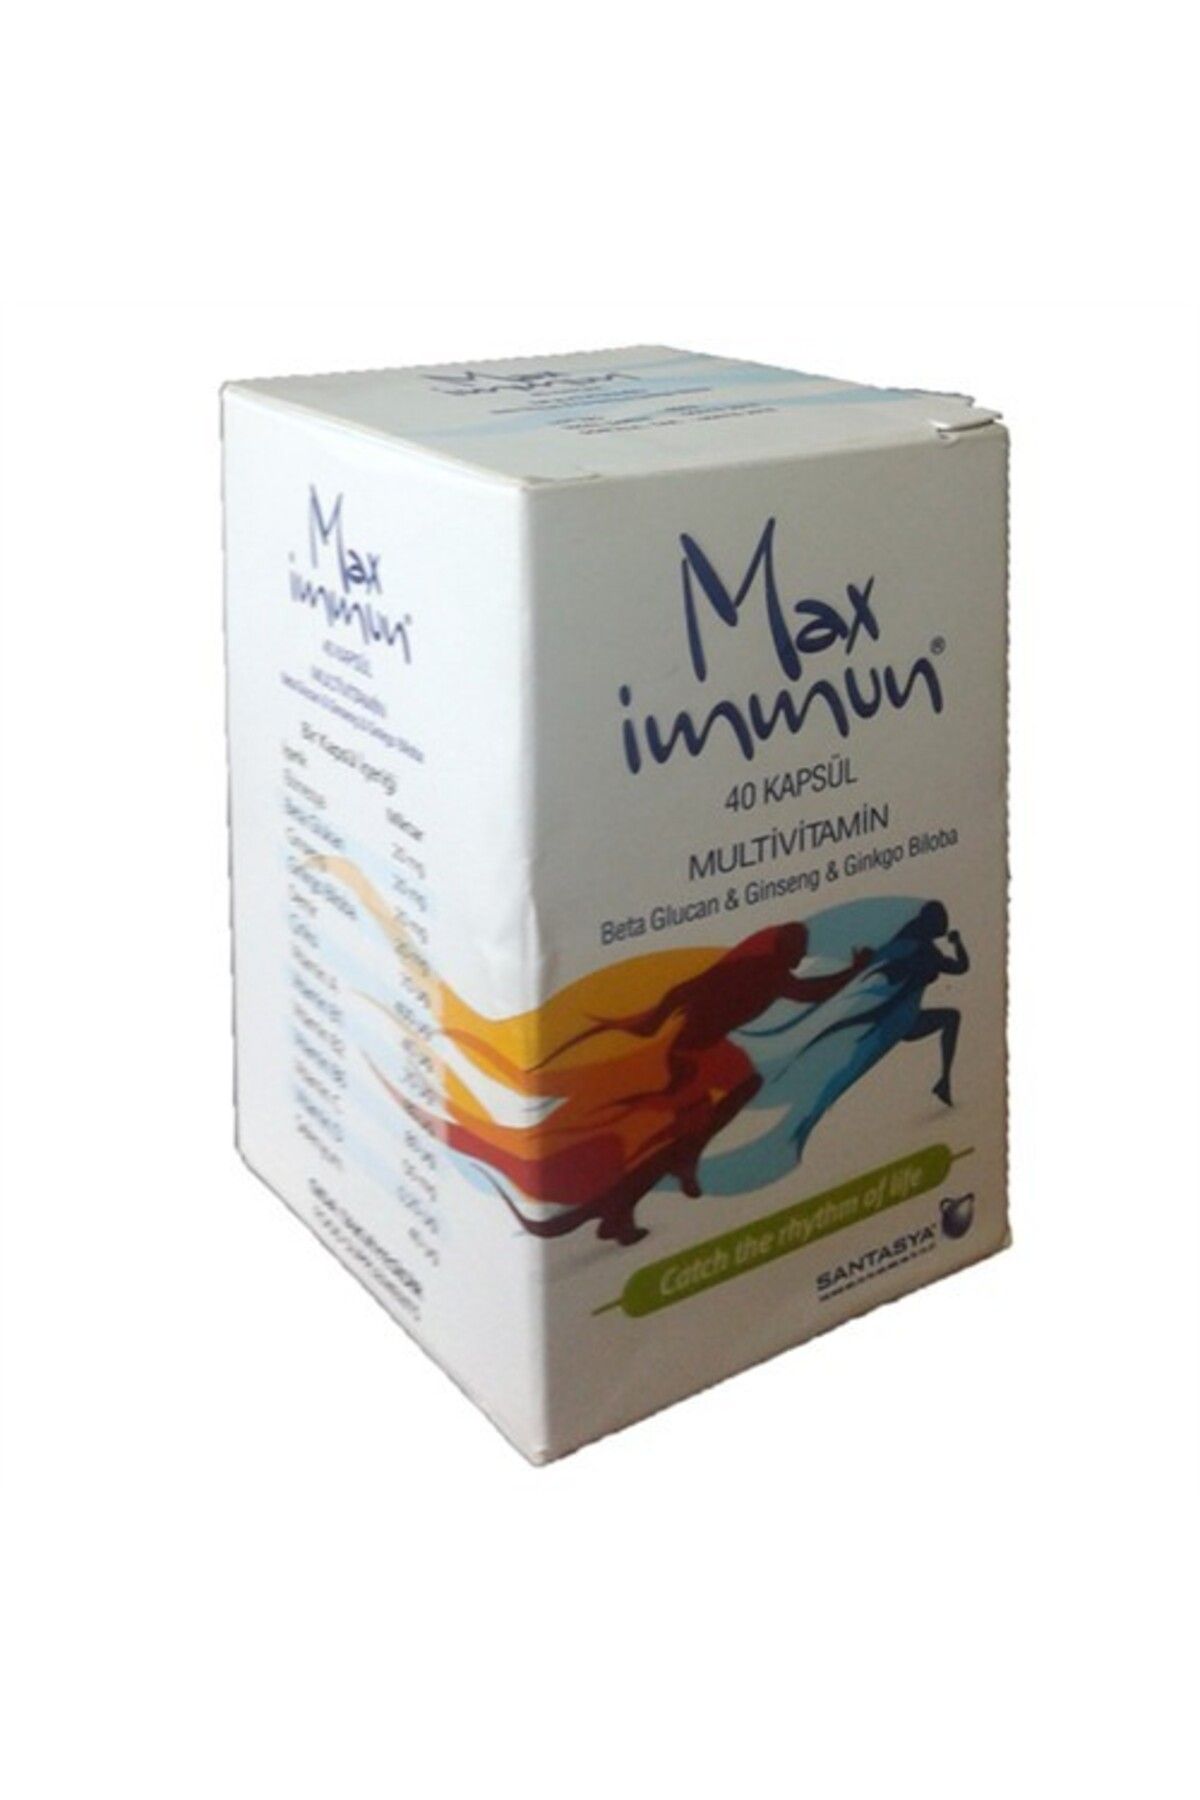 Max İmmun Max Immun 40 Kapsul Multivitamin